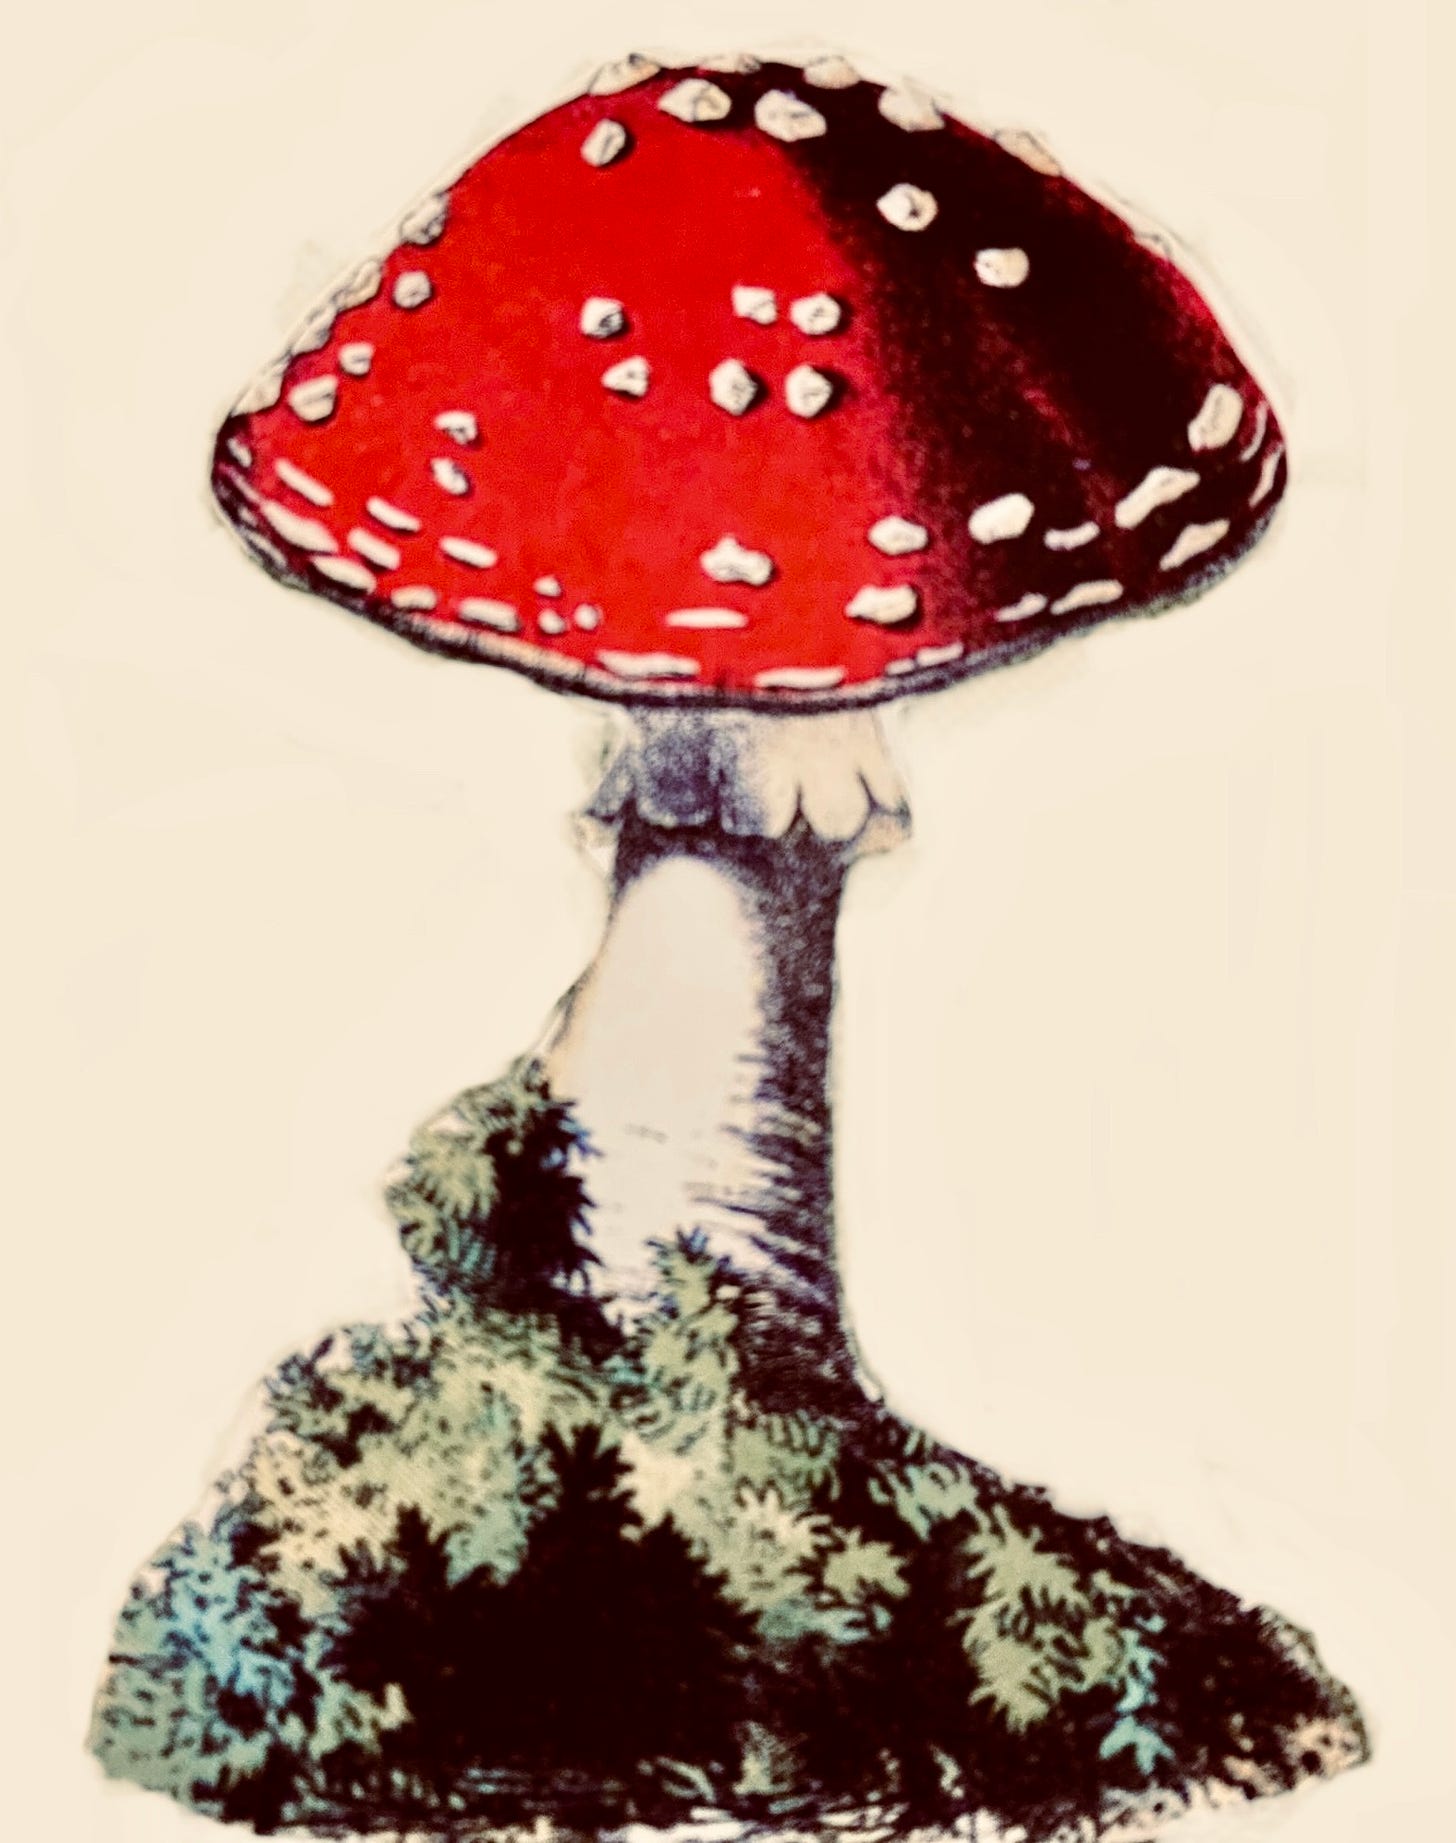 A strawberry colored mushroom.